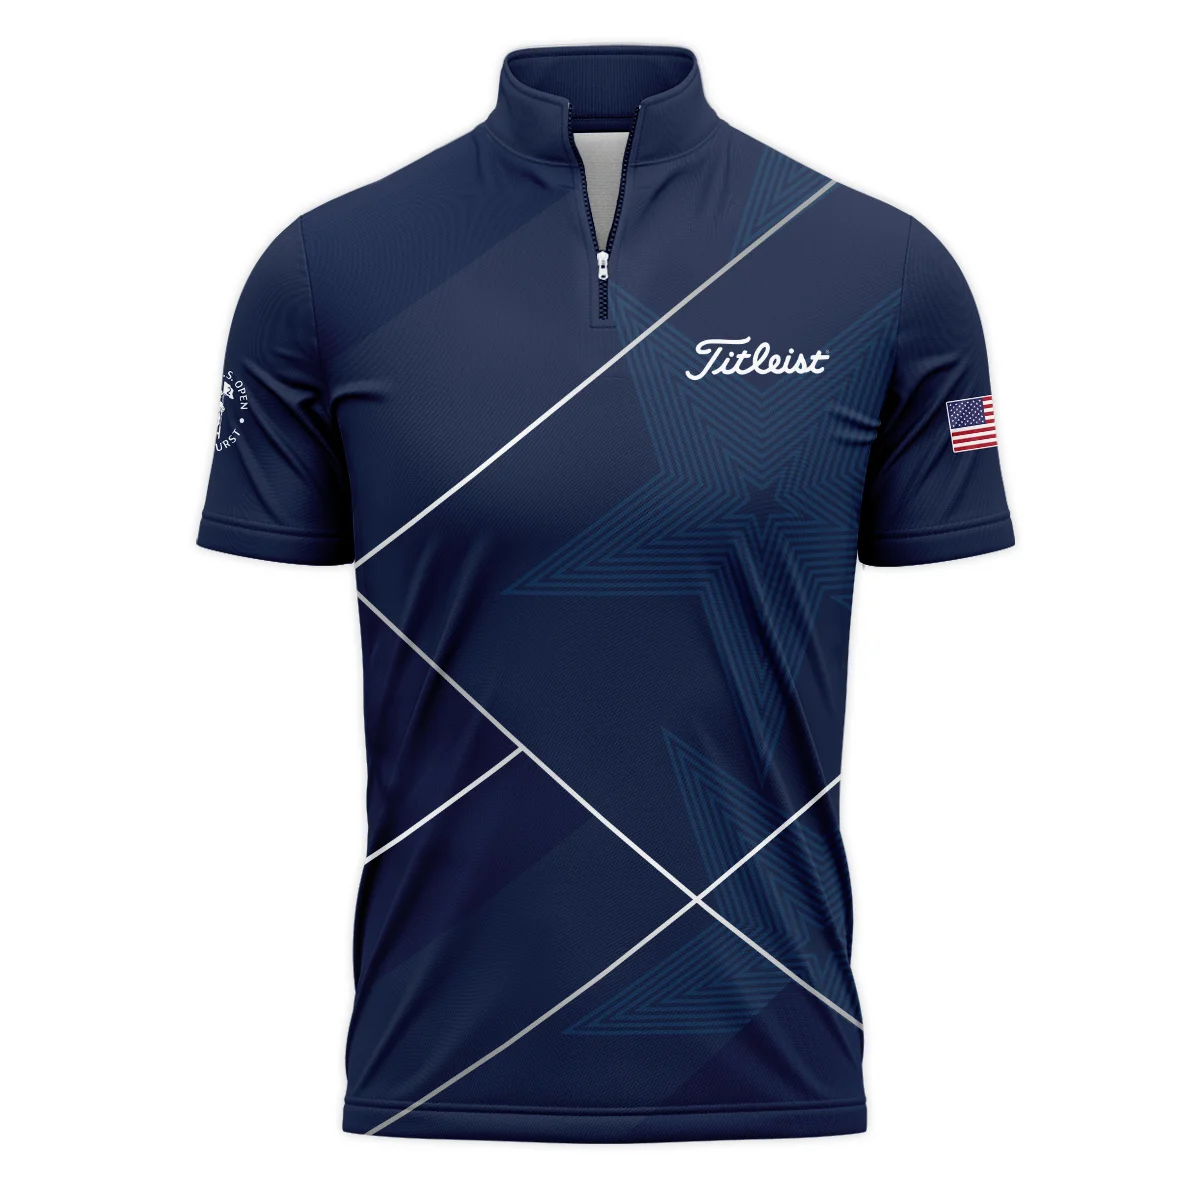 Golf Sport Pattern Blue Mix 124th U.S. Open Pinehurst Titlest Sleeveless Jacket Style Classic